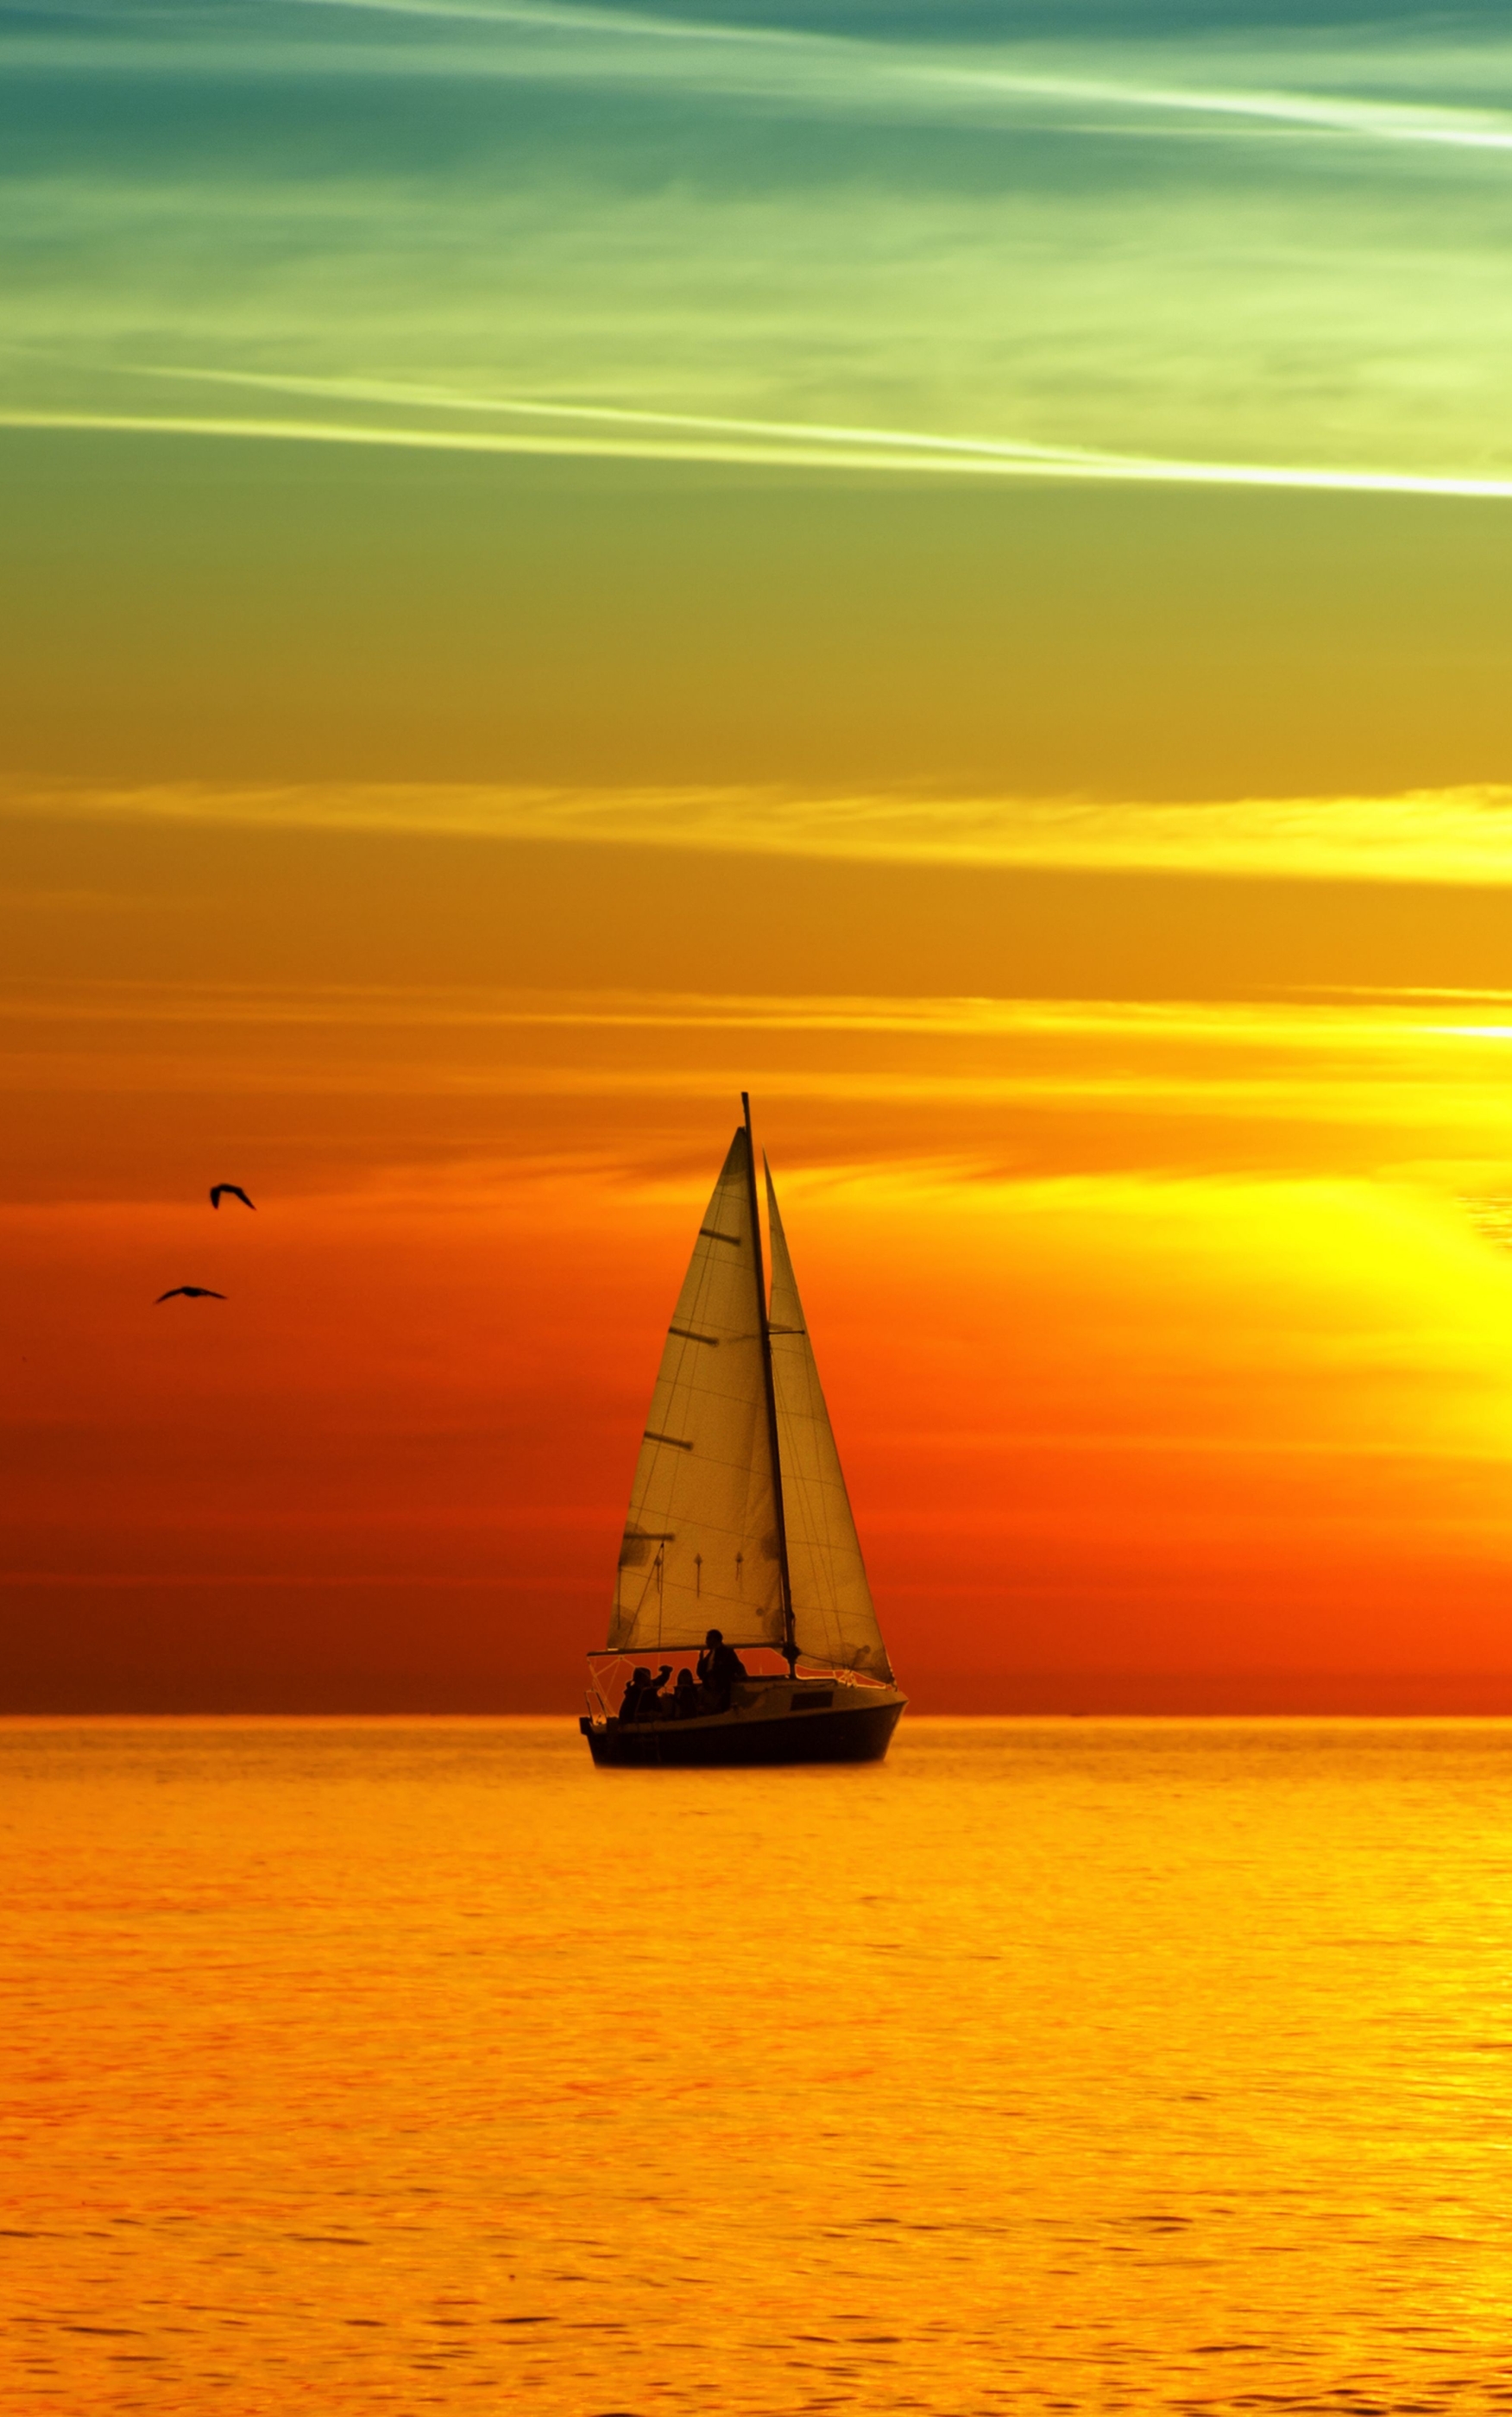 Sailing the Ocean at Sunset